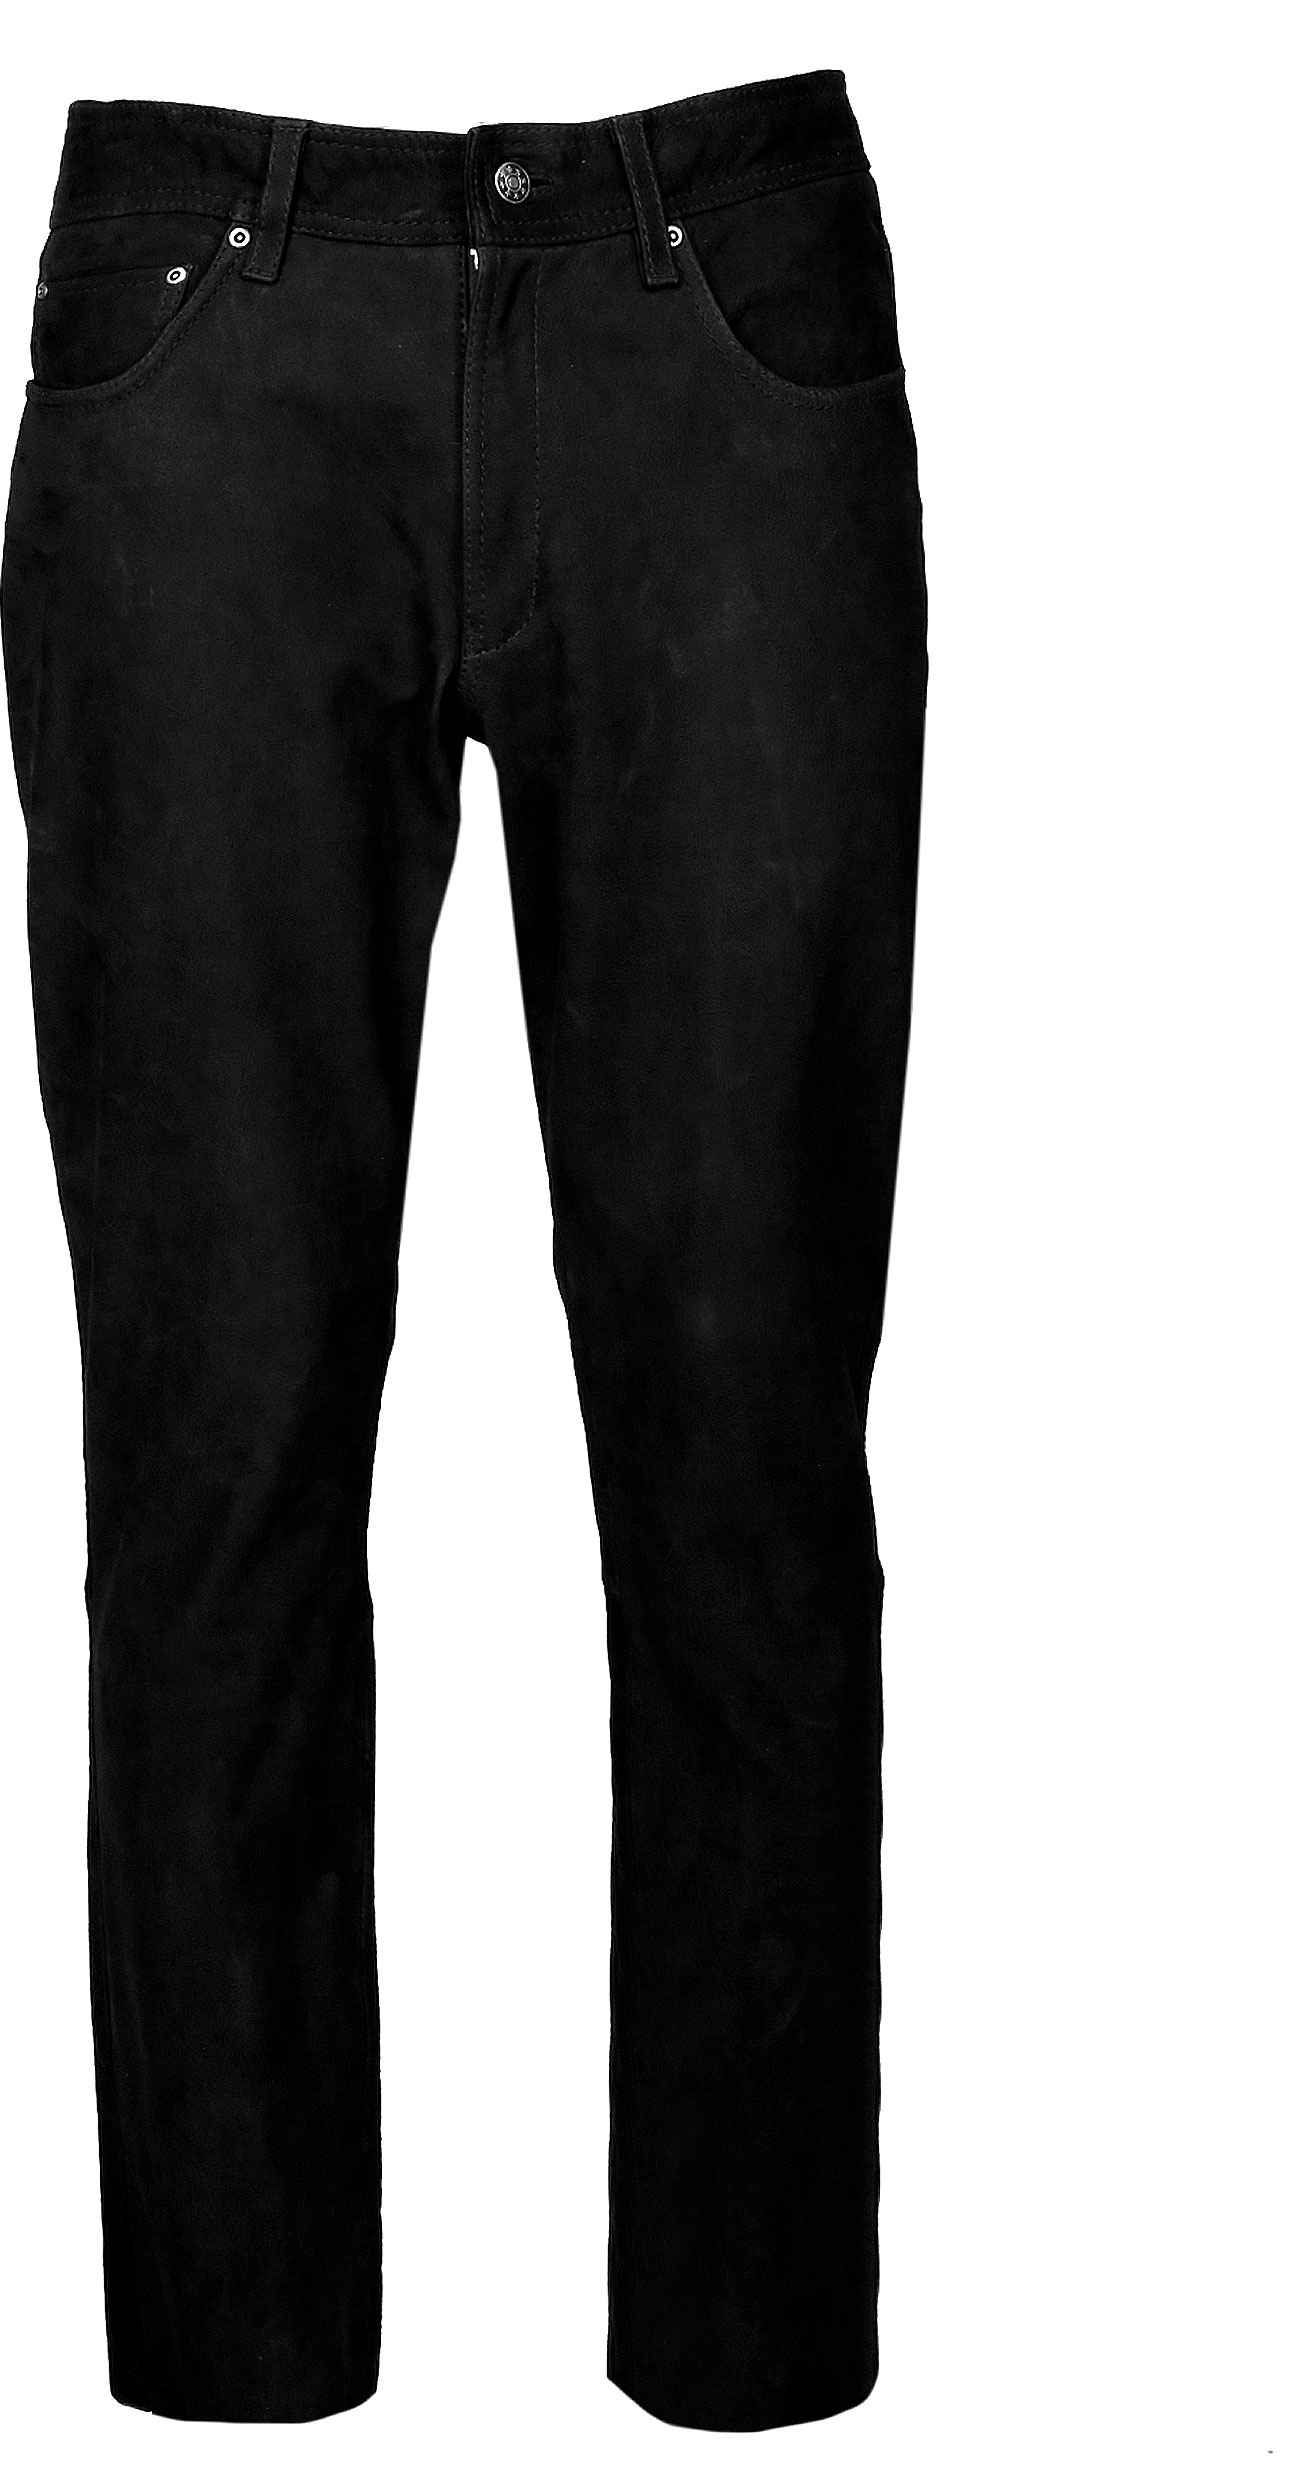 JCC Phill, pantalon en cuir - Noir - 52